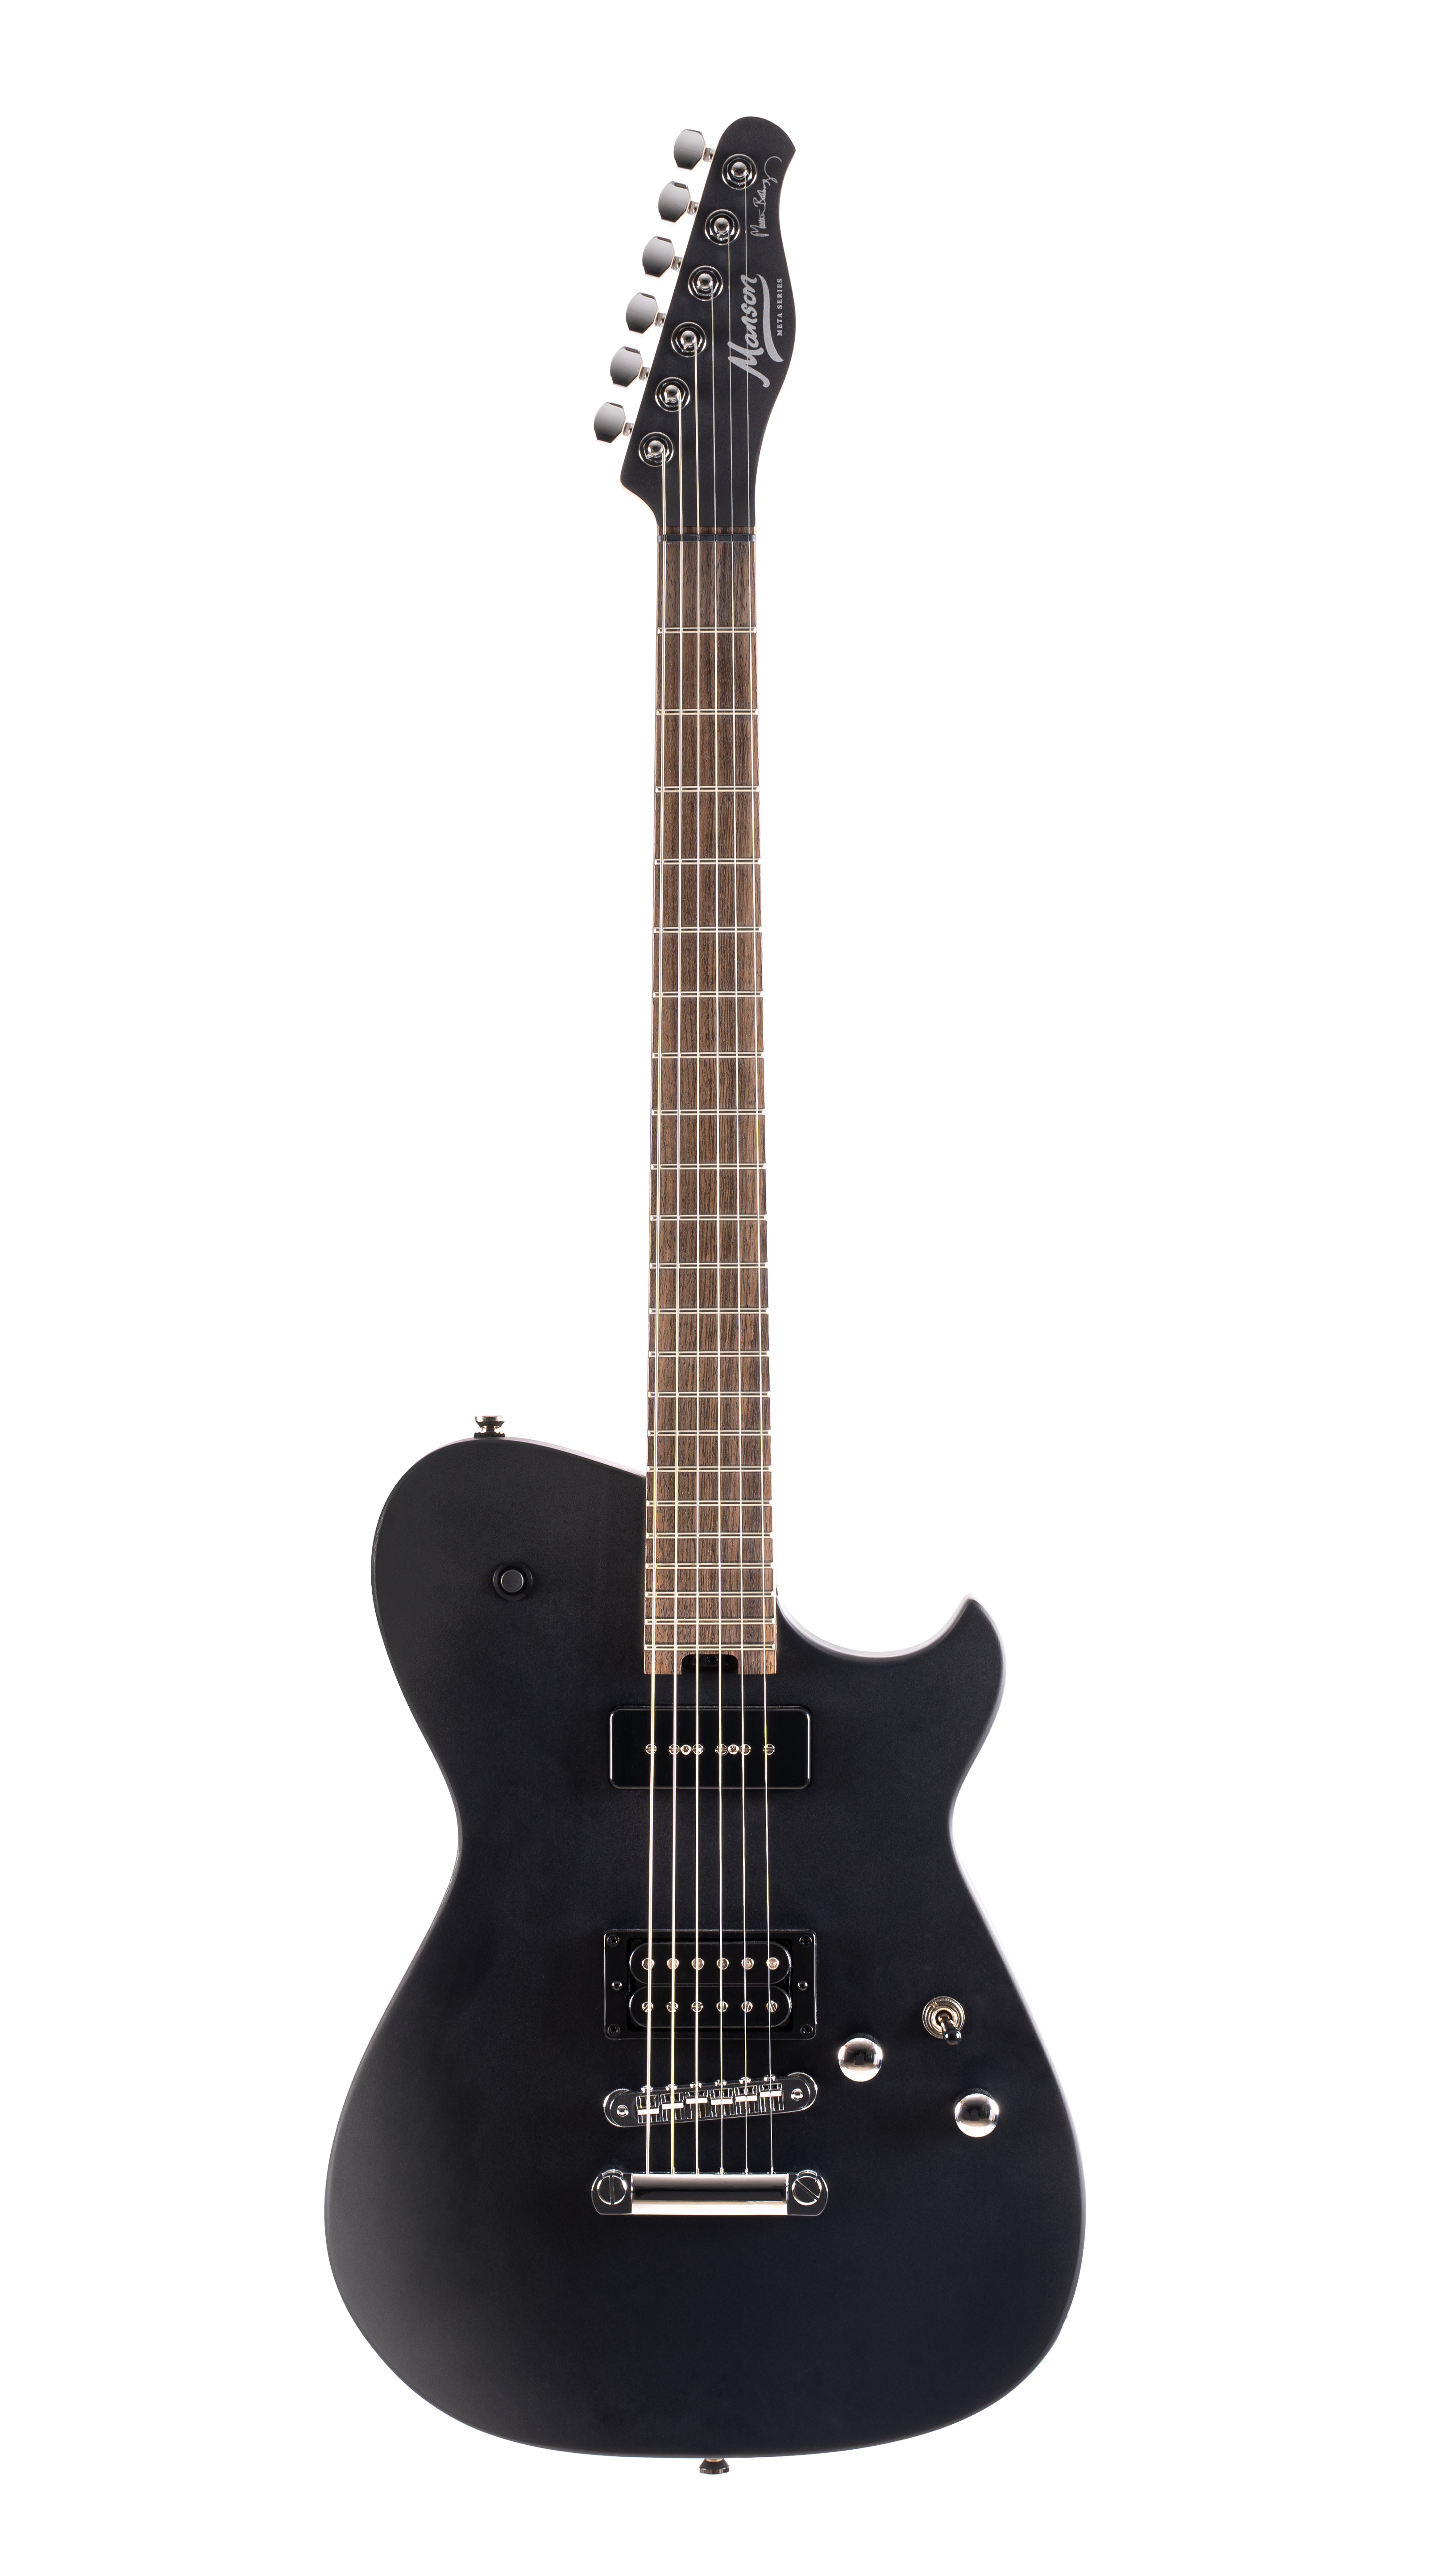 Manson Meta Series MBM-2P Satin Black, Electric Guitar for sale at Richards Guitars.